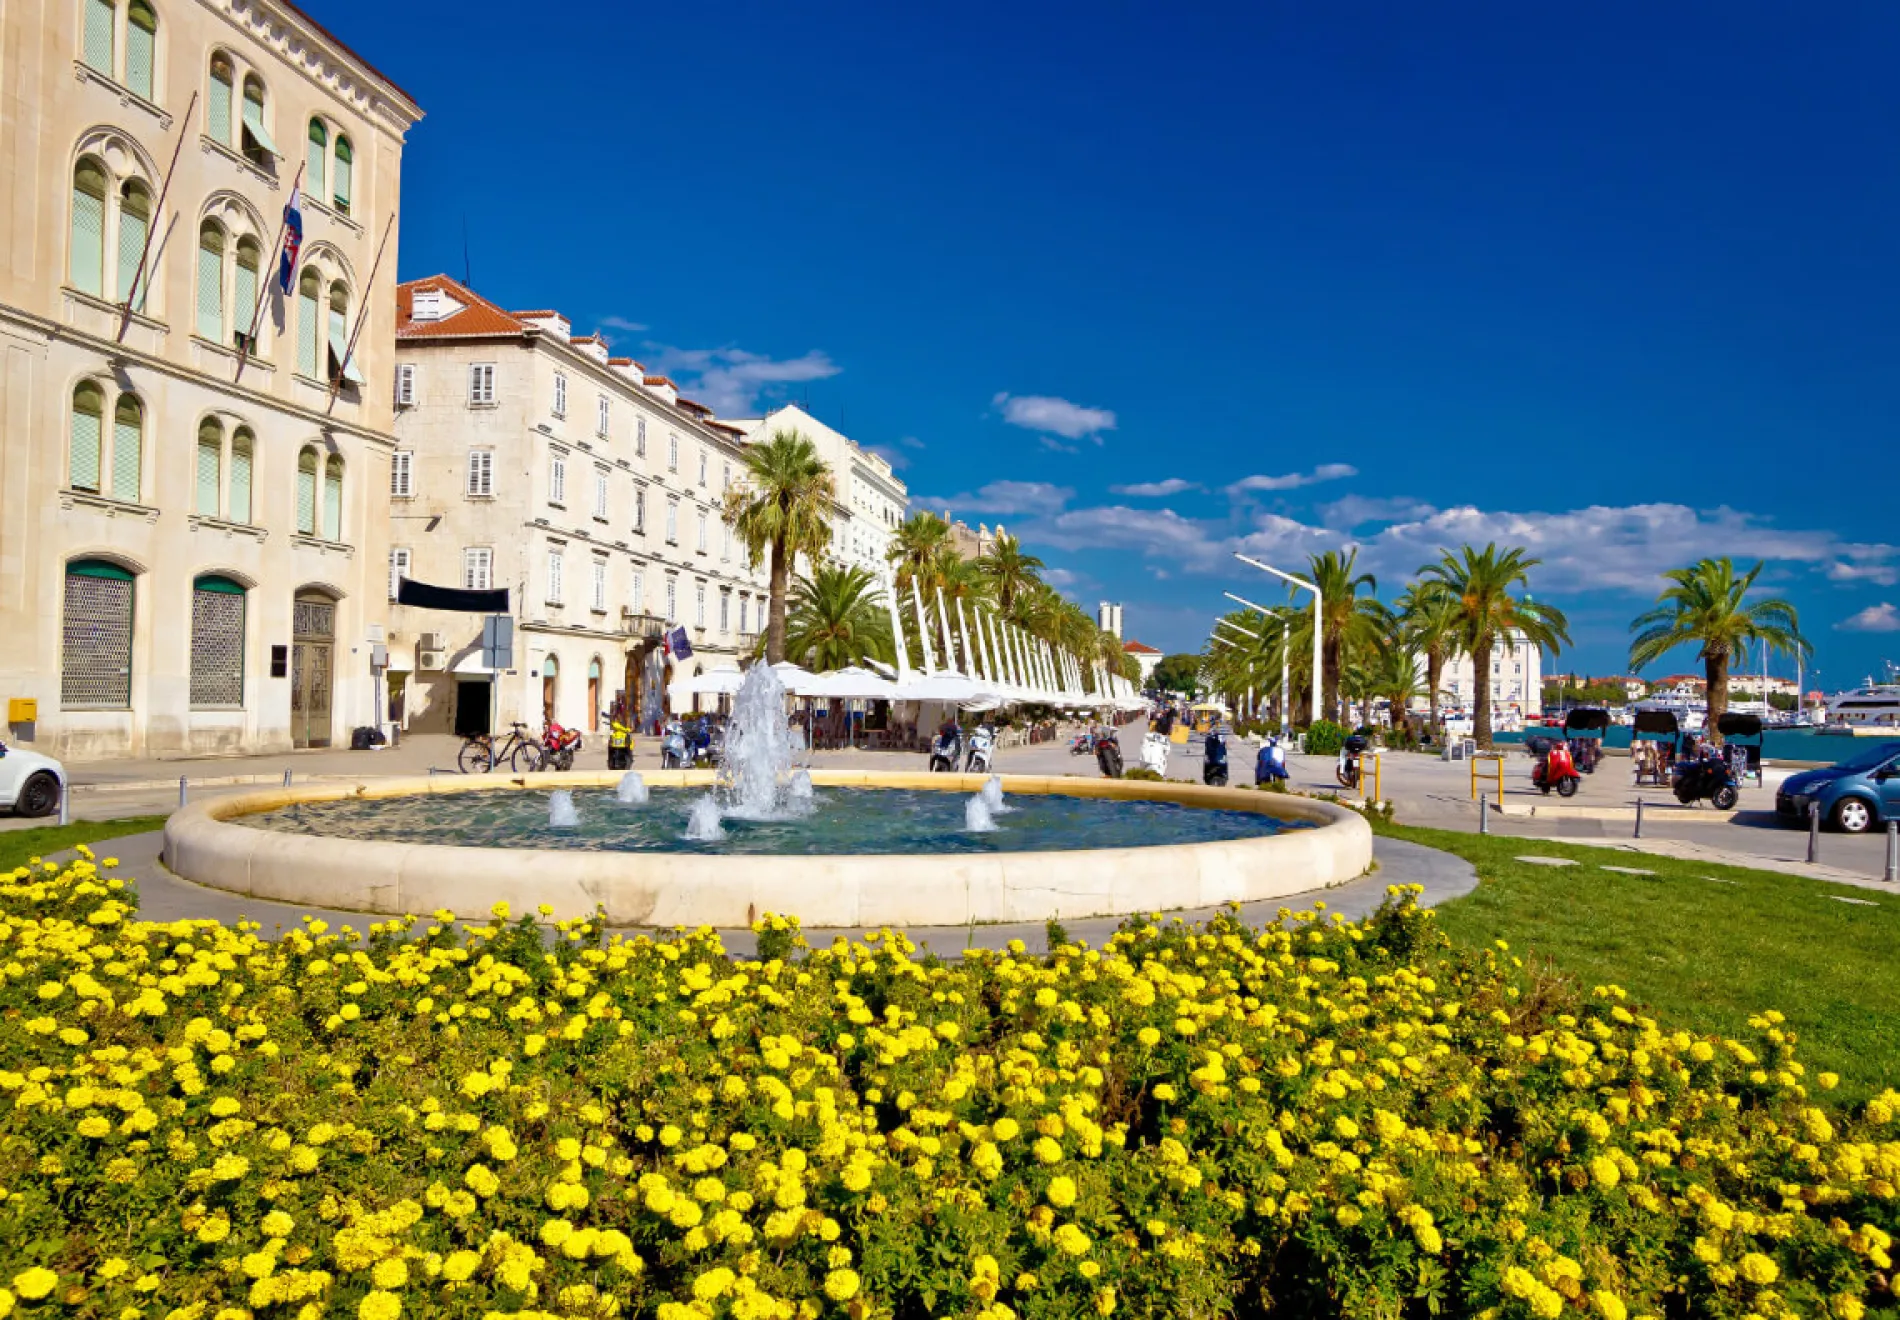 City of Split Riva fountain and waterfront view Dalmatia Croatia